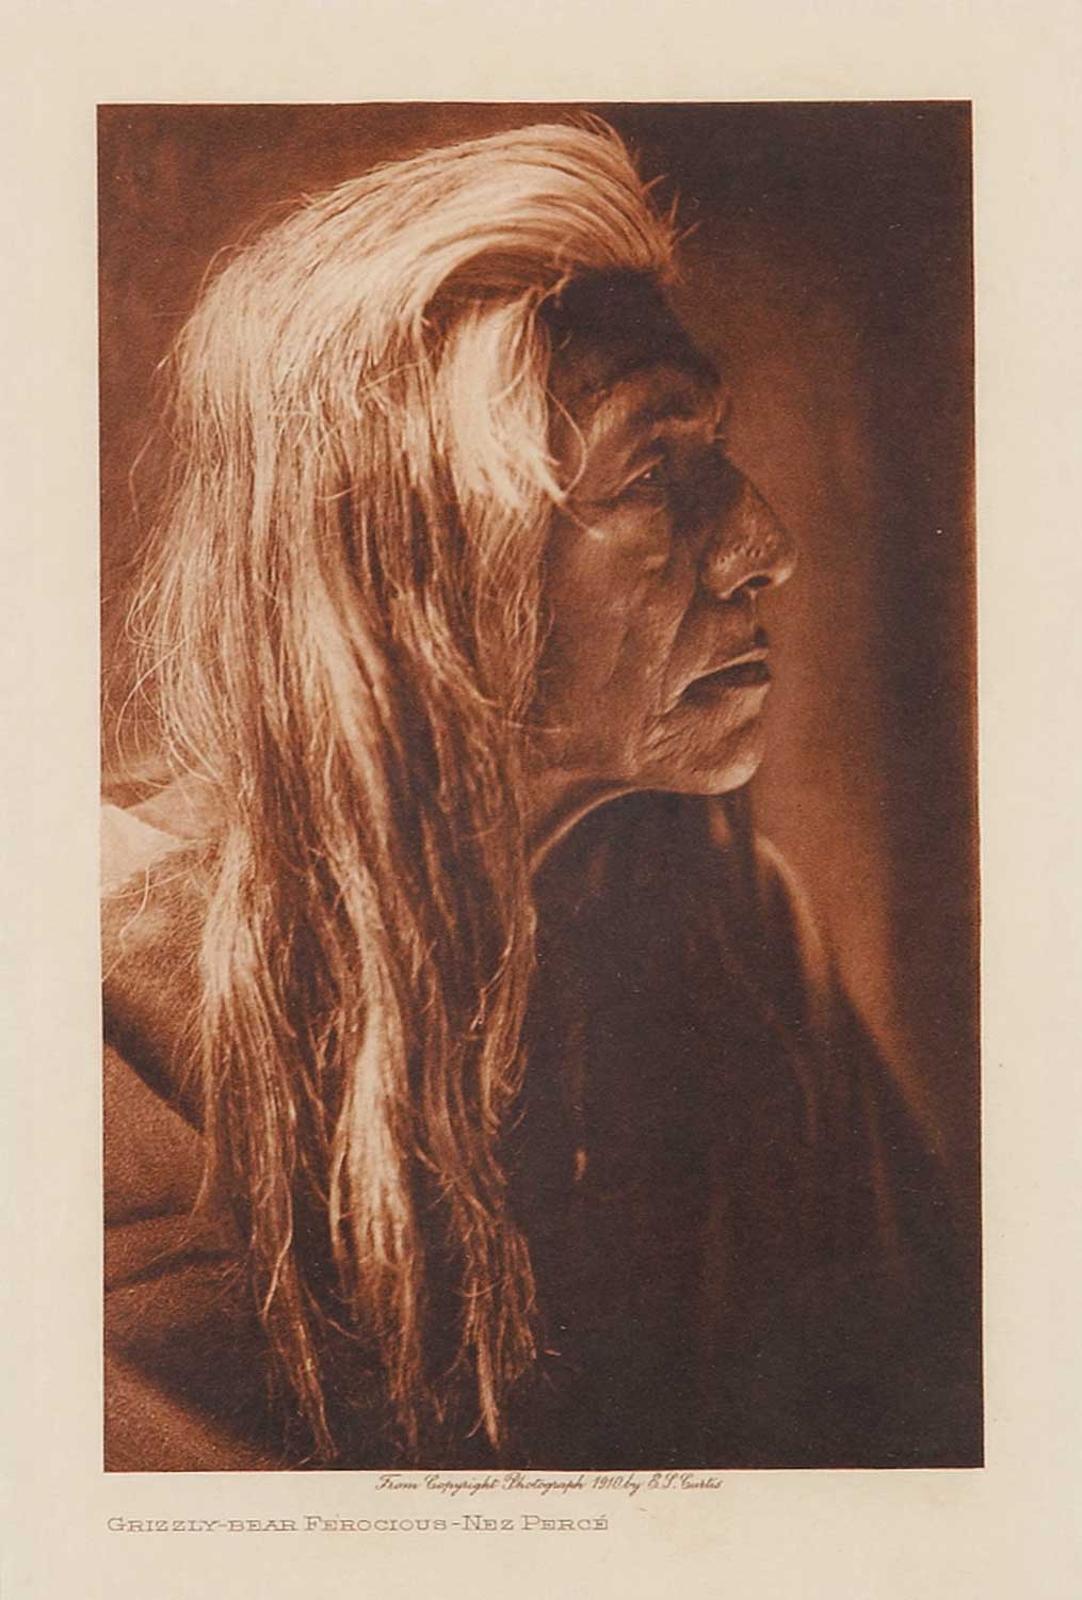 Edward Sherrif Curtis (1868-1952) - Grizzly-Bear Ferocious - Nez Perce